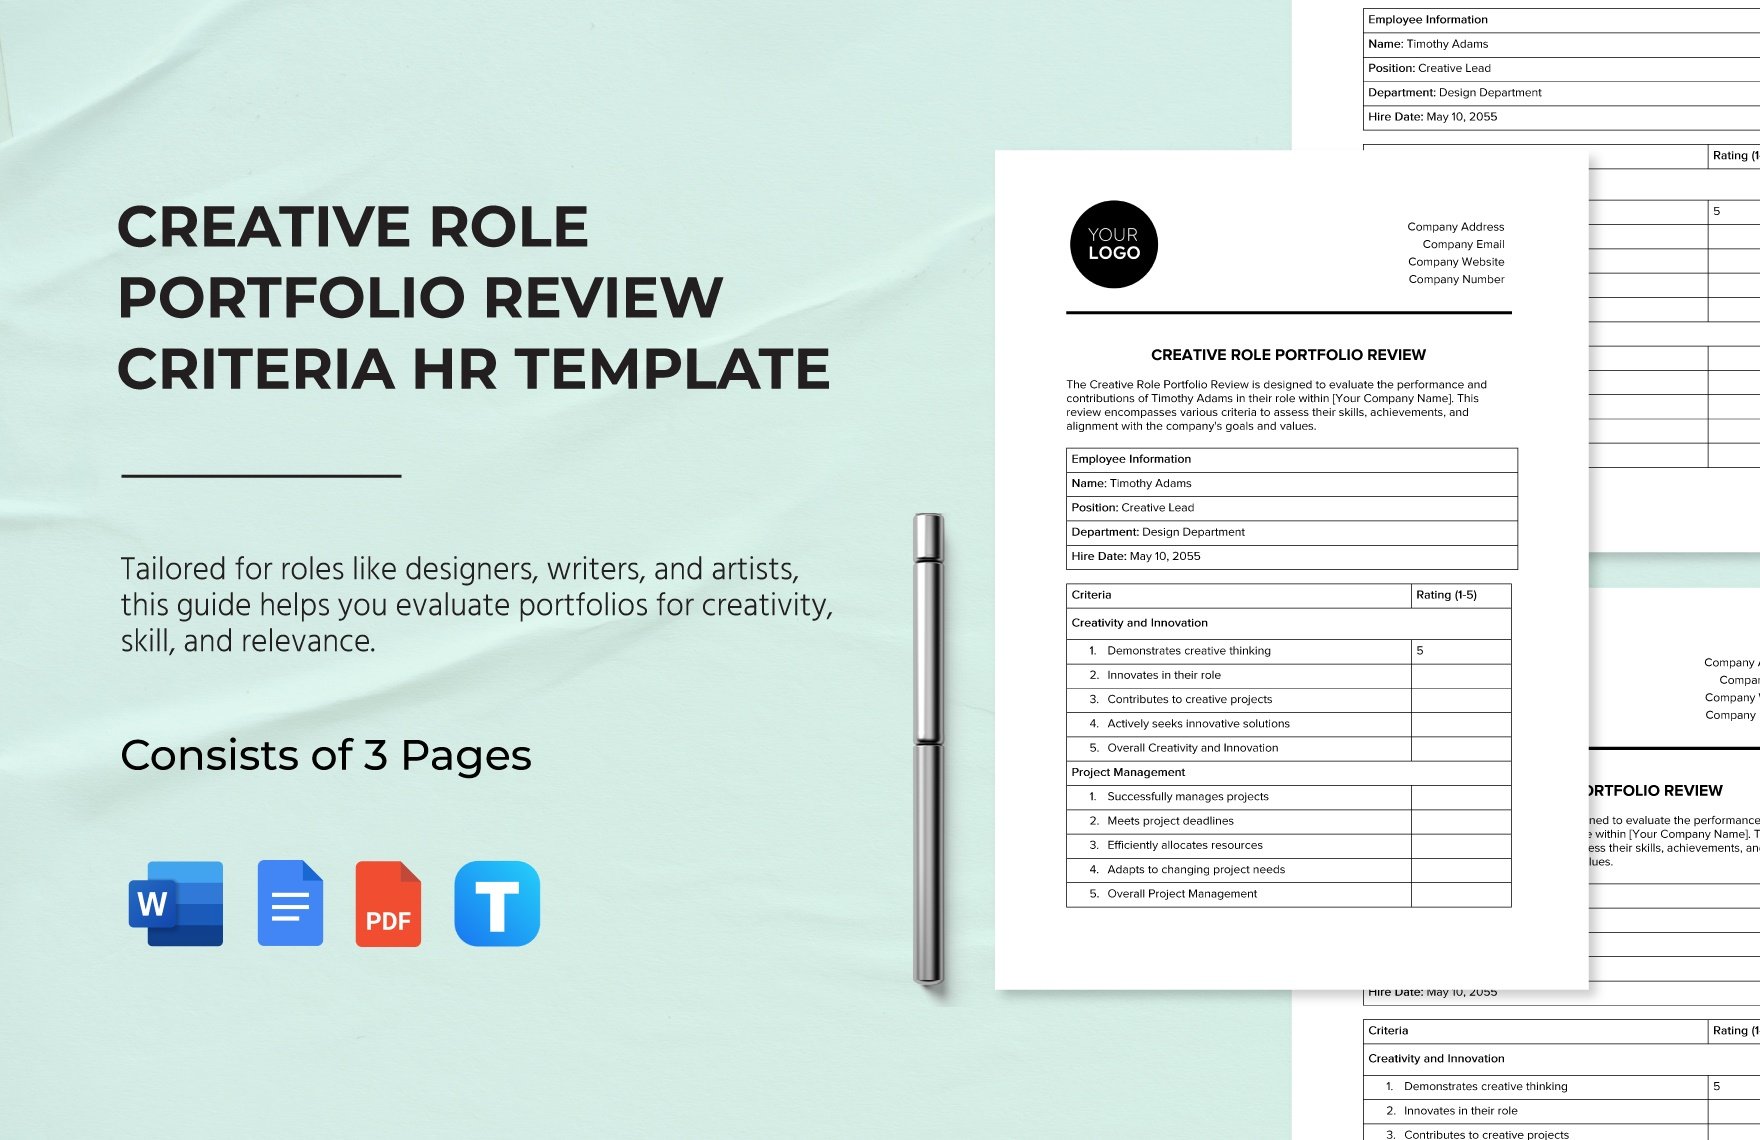 Creative Role Portfolio Review Criteria HR Template